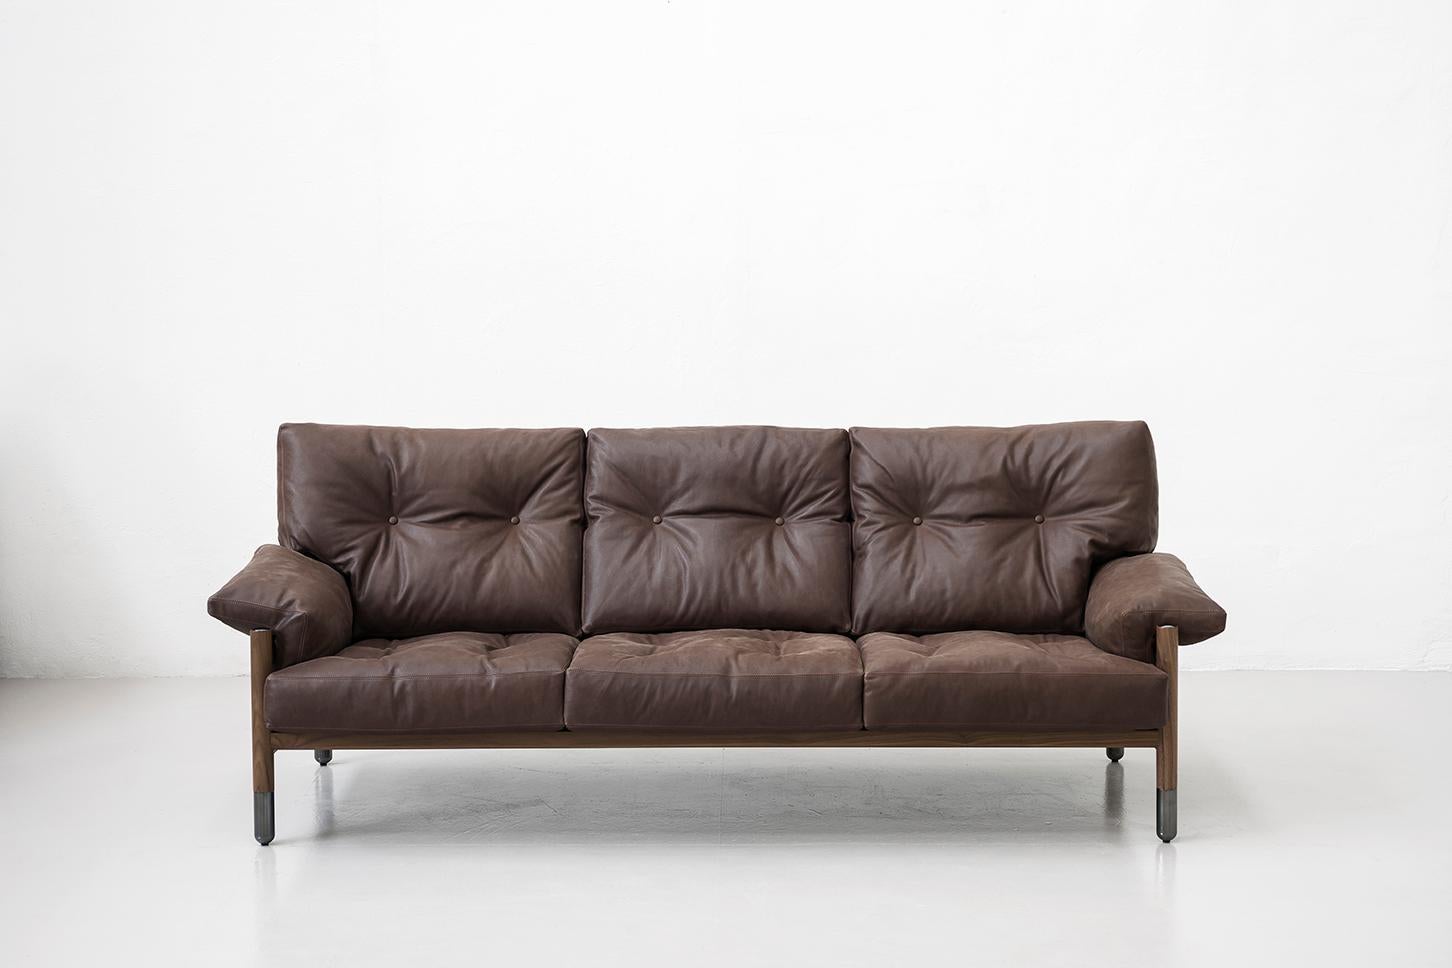 Anpassbares Tacchini-Sella-Sofa, entworfen von Carlo de Carli im Angebot 4